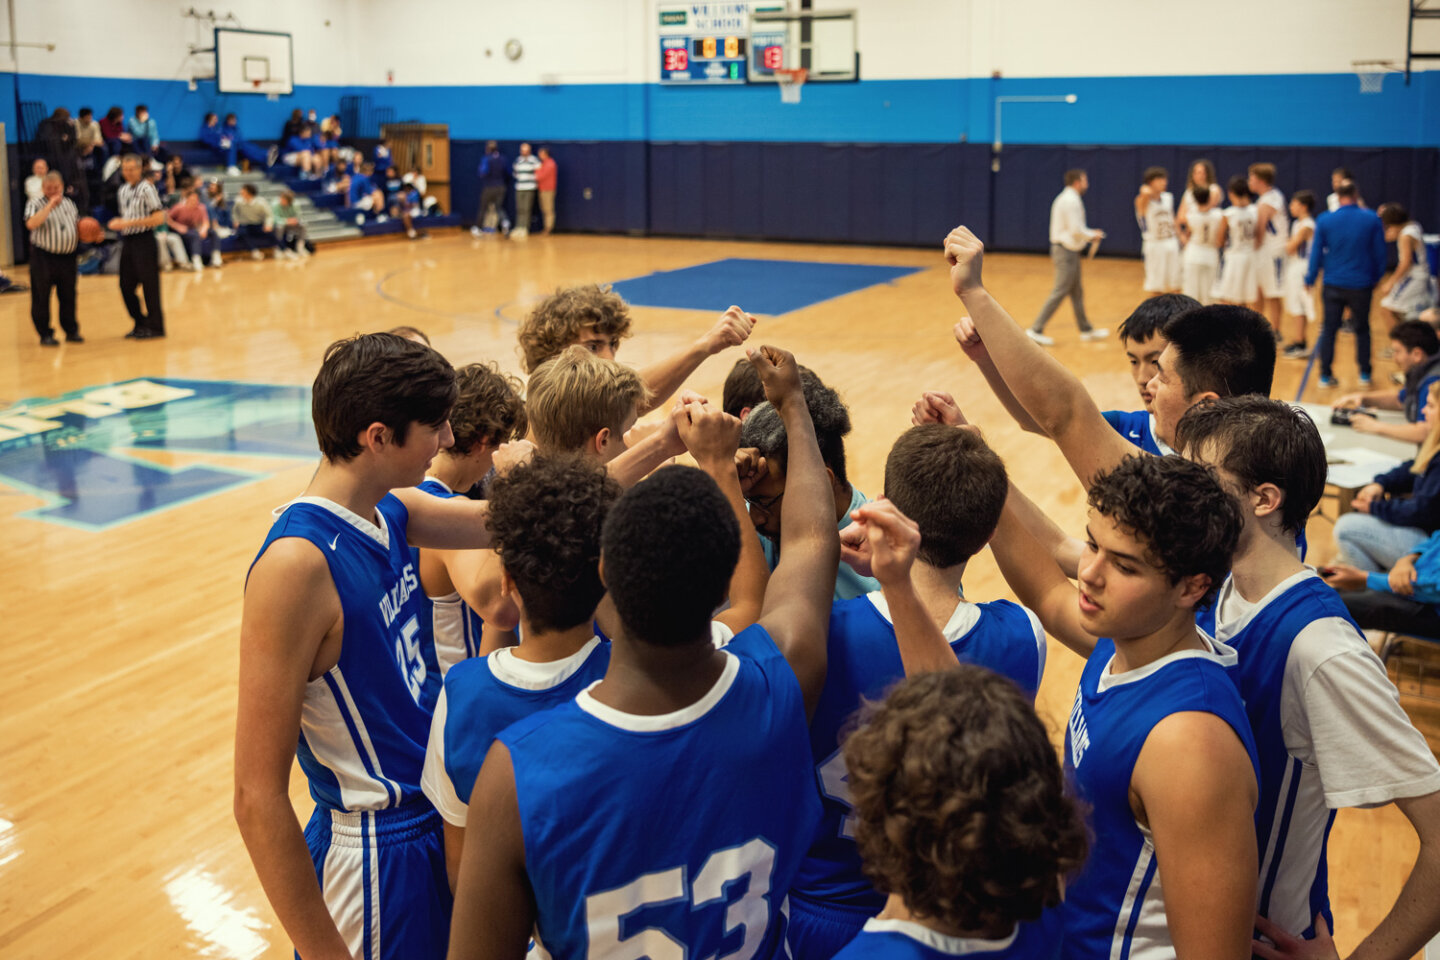 Boys basketball team huddles around coach during game